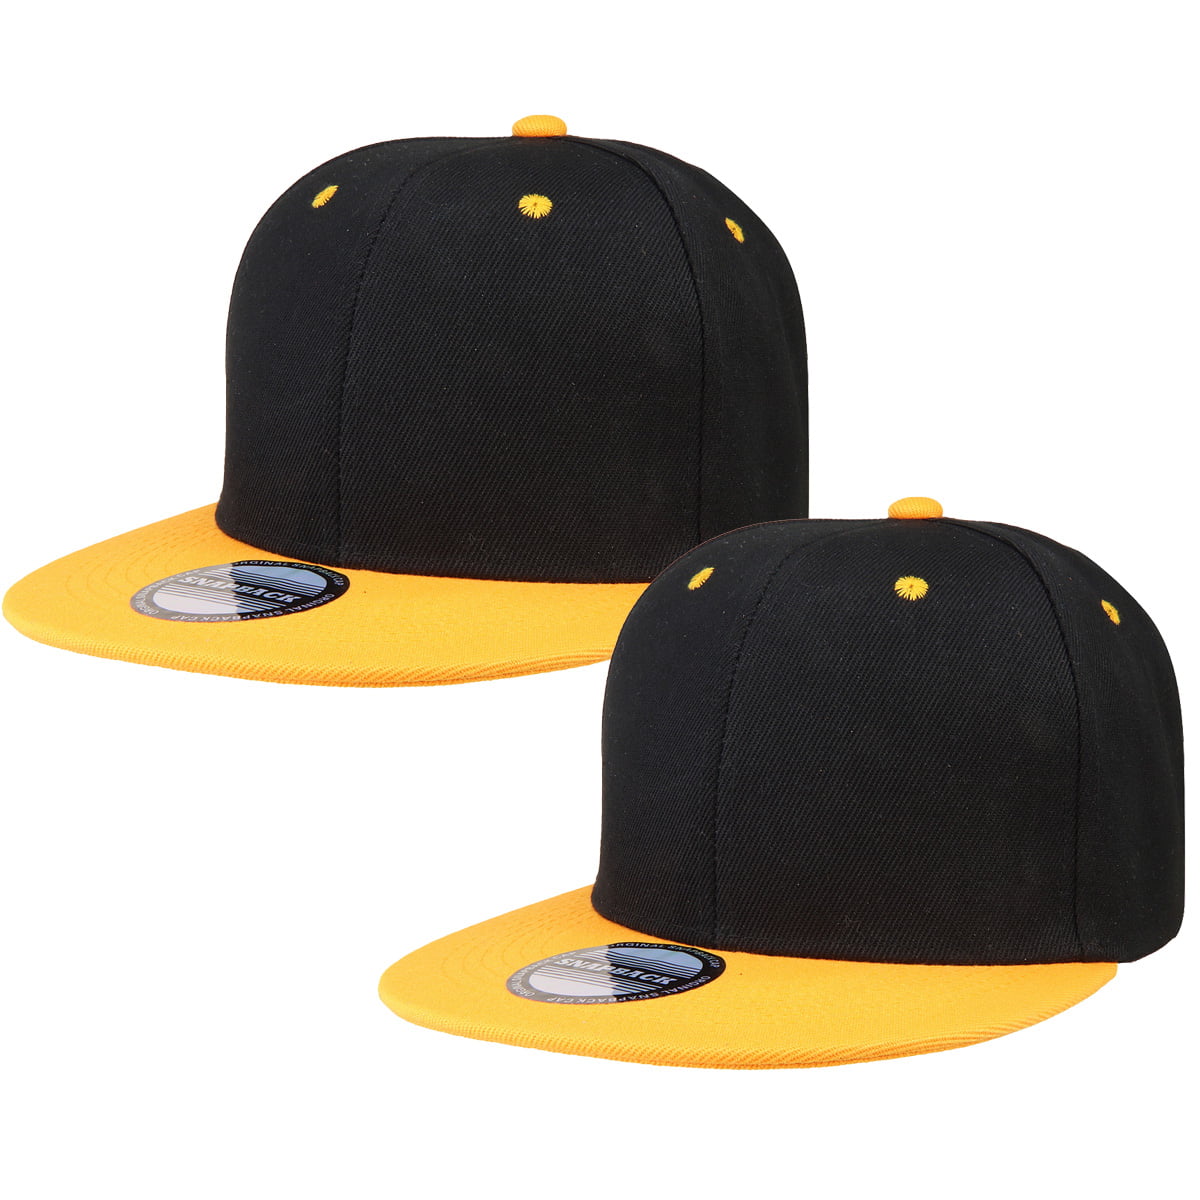 New Fitted Retro Flat Bill Vintage Hip Hop Snapback Baseball Hats Caps Visor Hat 